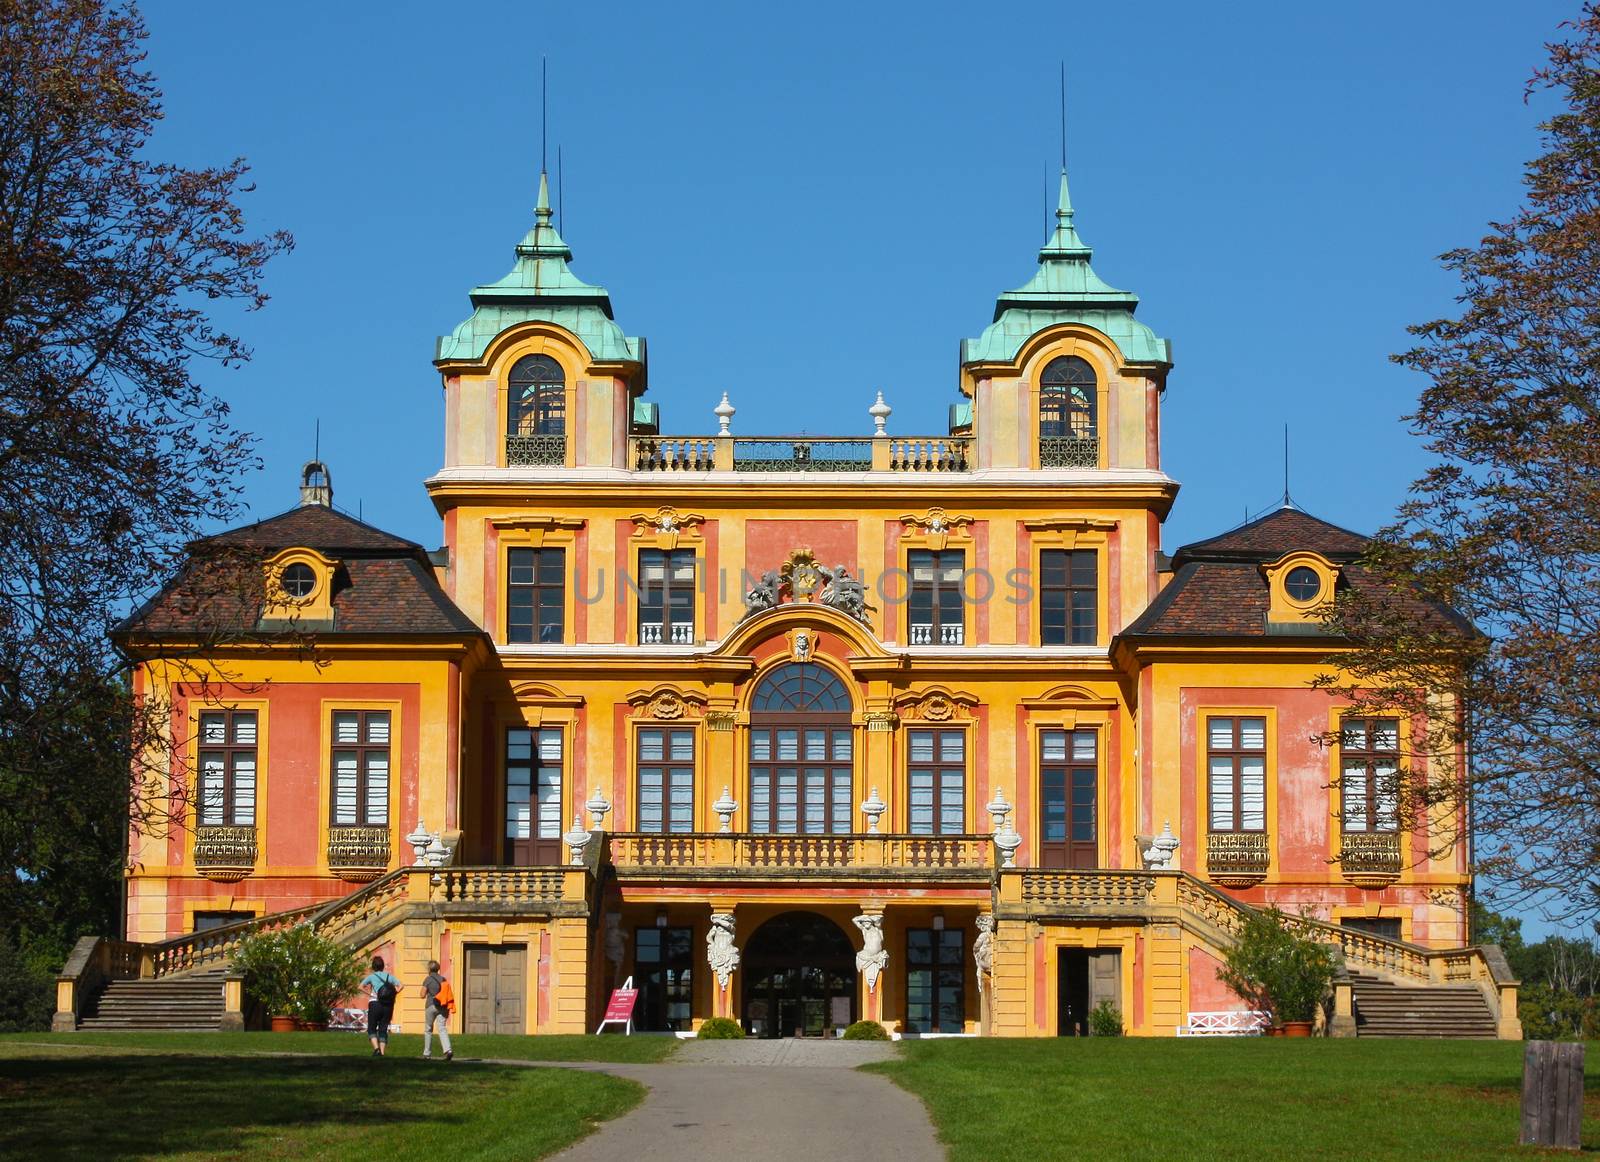 Schloss Favorite in Ludwigsburg.Baden-Wurttemberg,Germany by borisb17